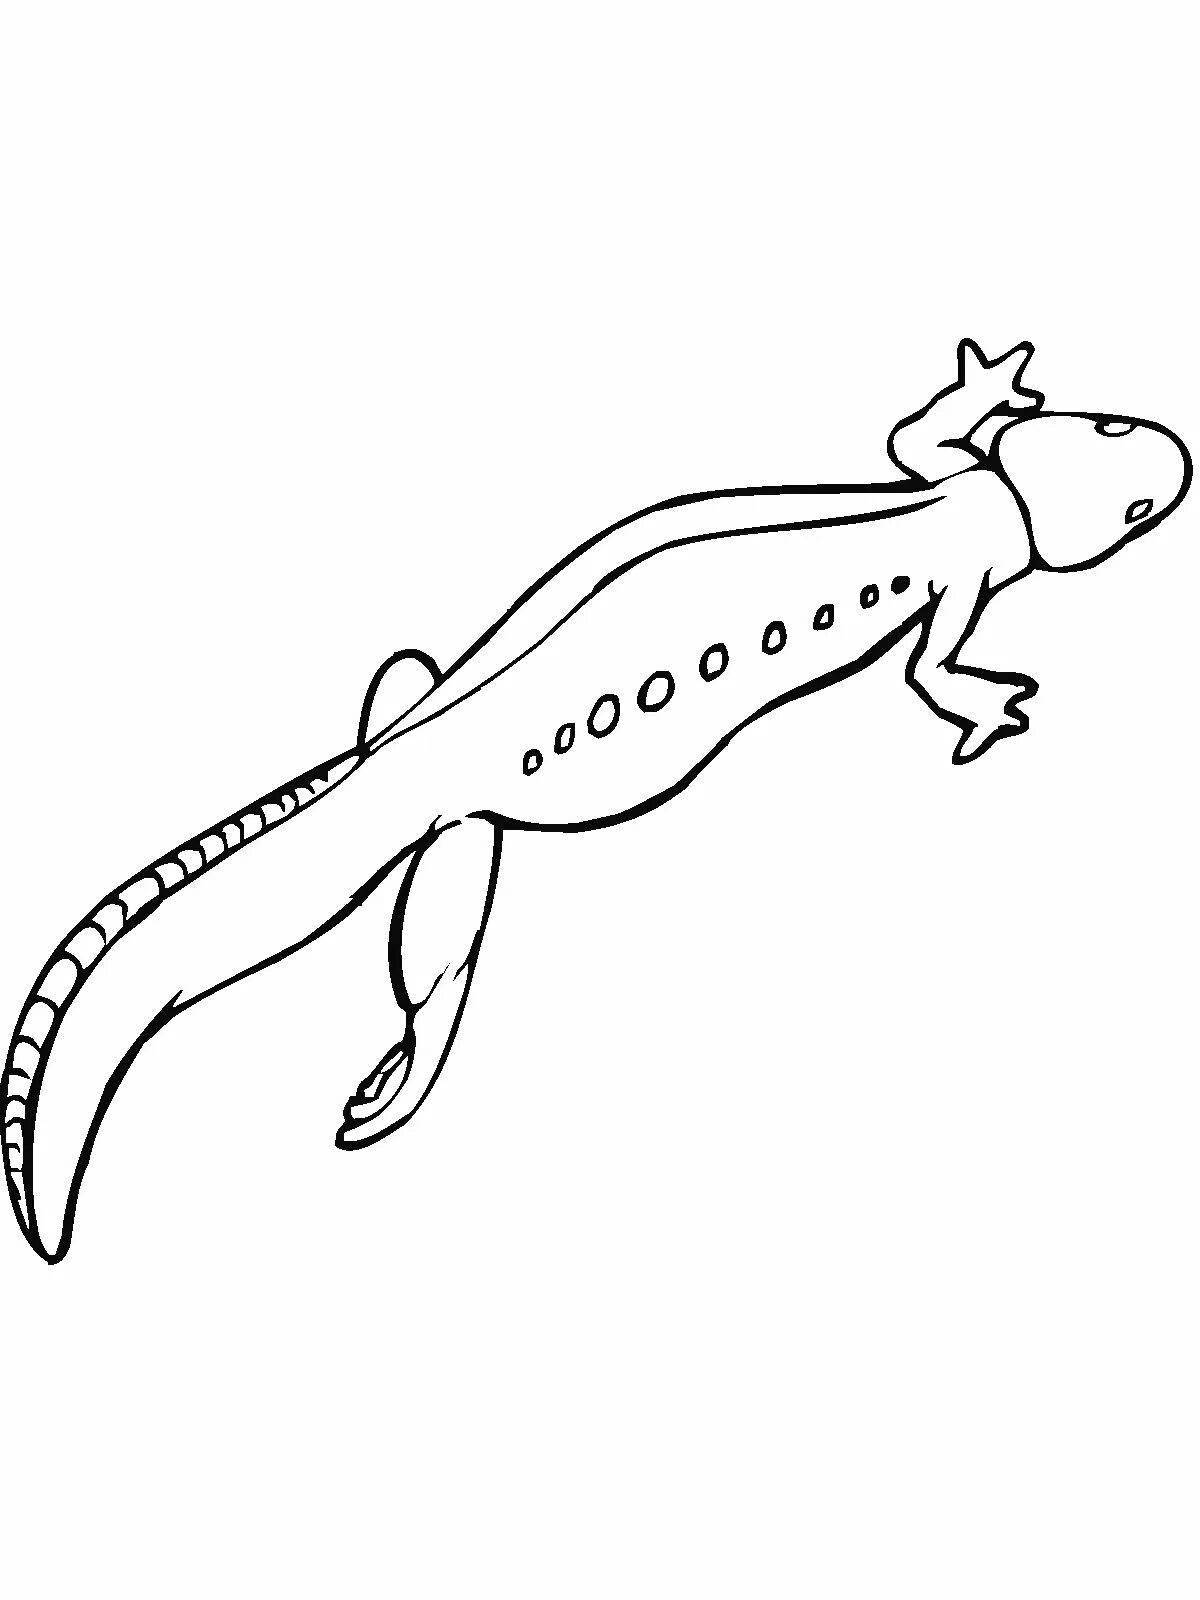 Coloring page magic salamander